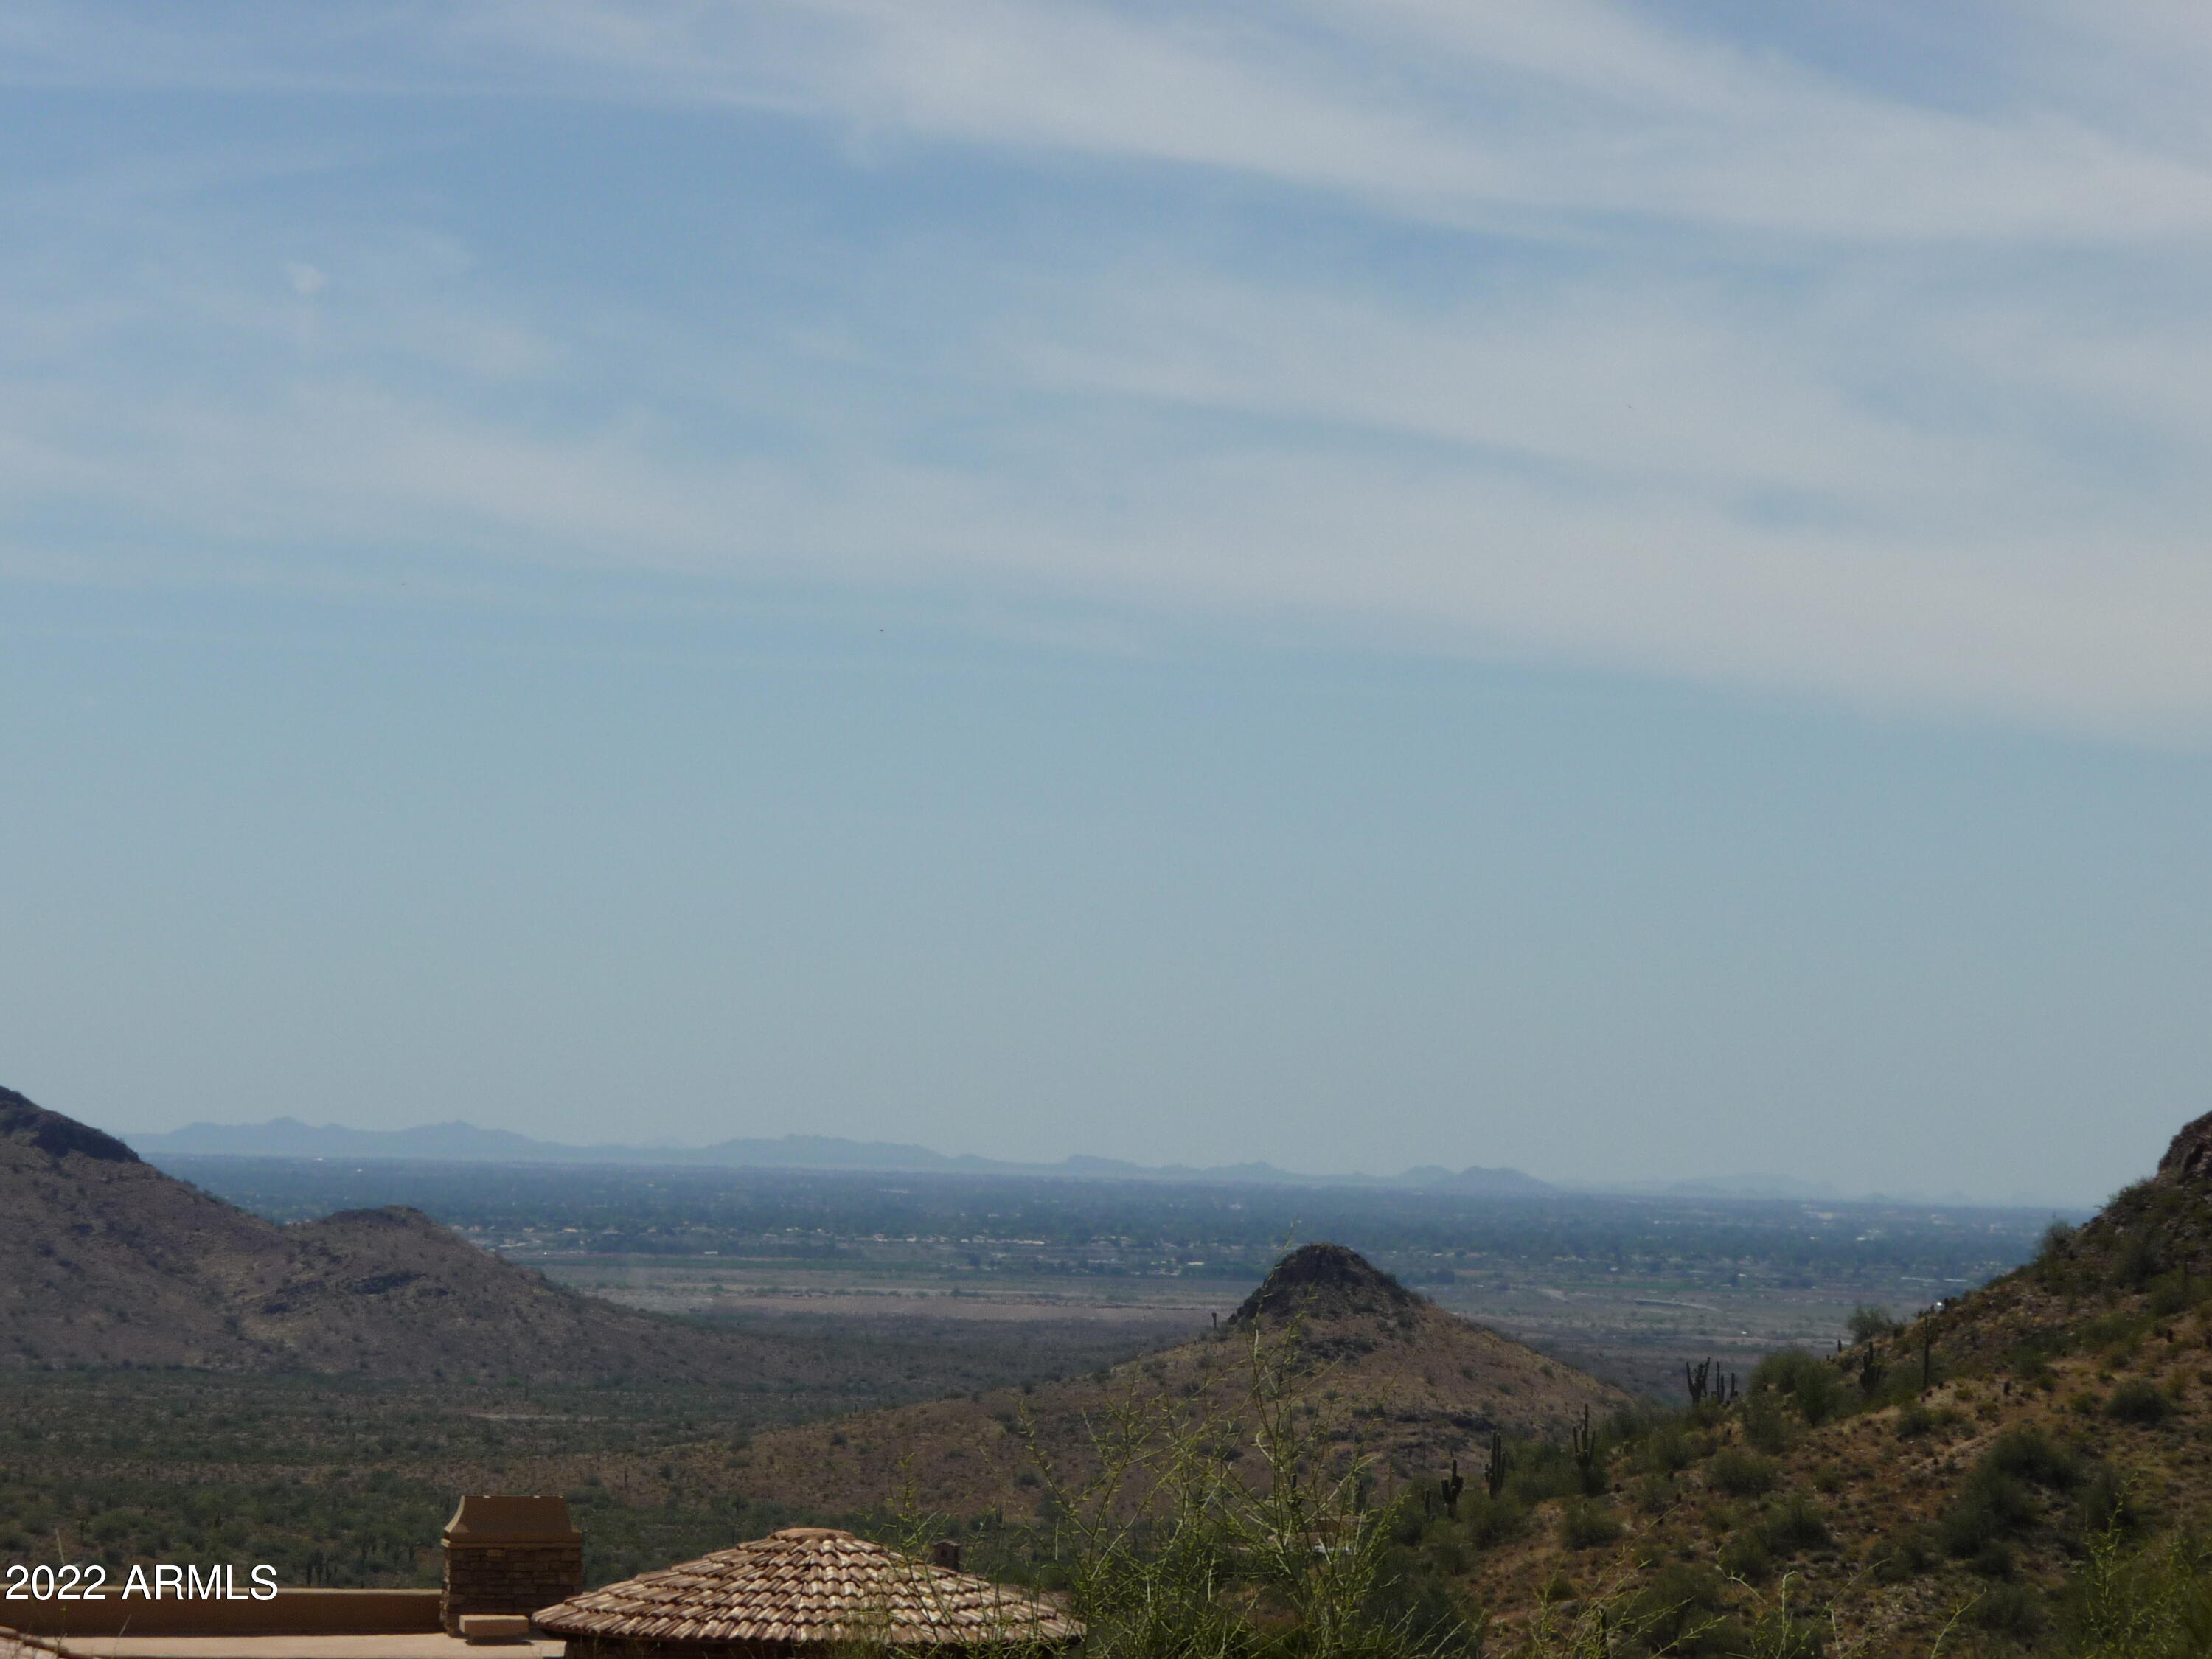 View Fountain Hills, AZ 85268 land